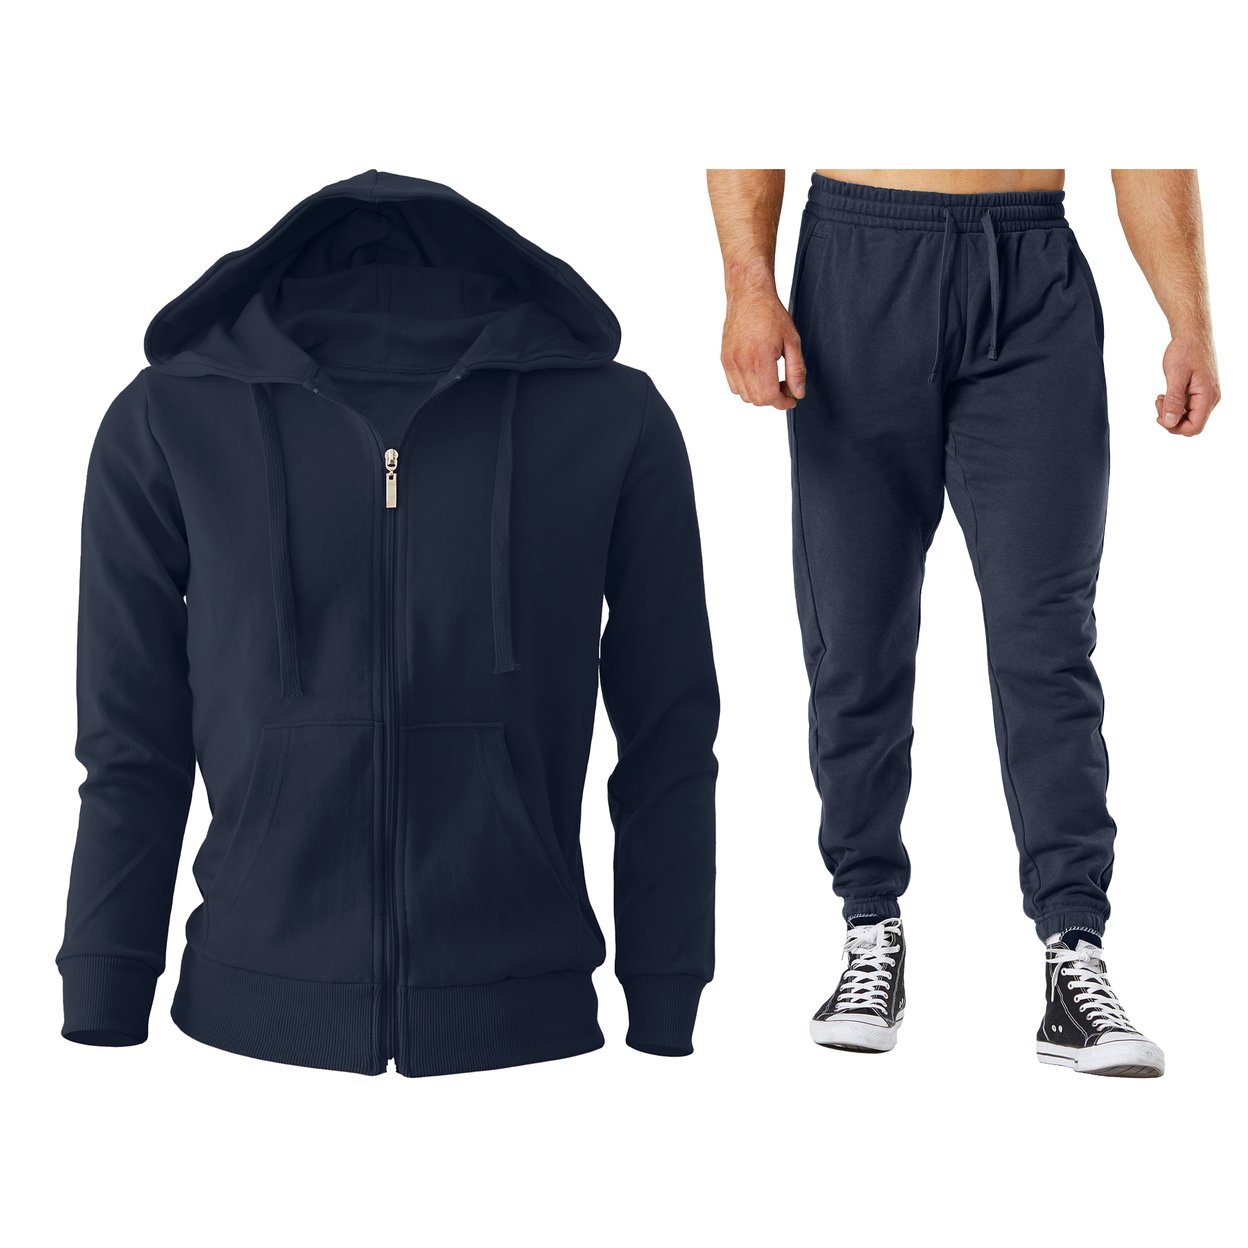 4-Piece: Men's Winter Warm Cozy Athletic Multi-Pockets BIG & TALL Sweatsuit Set - Grey, Large